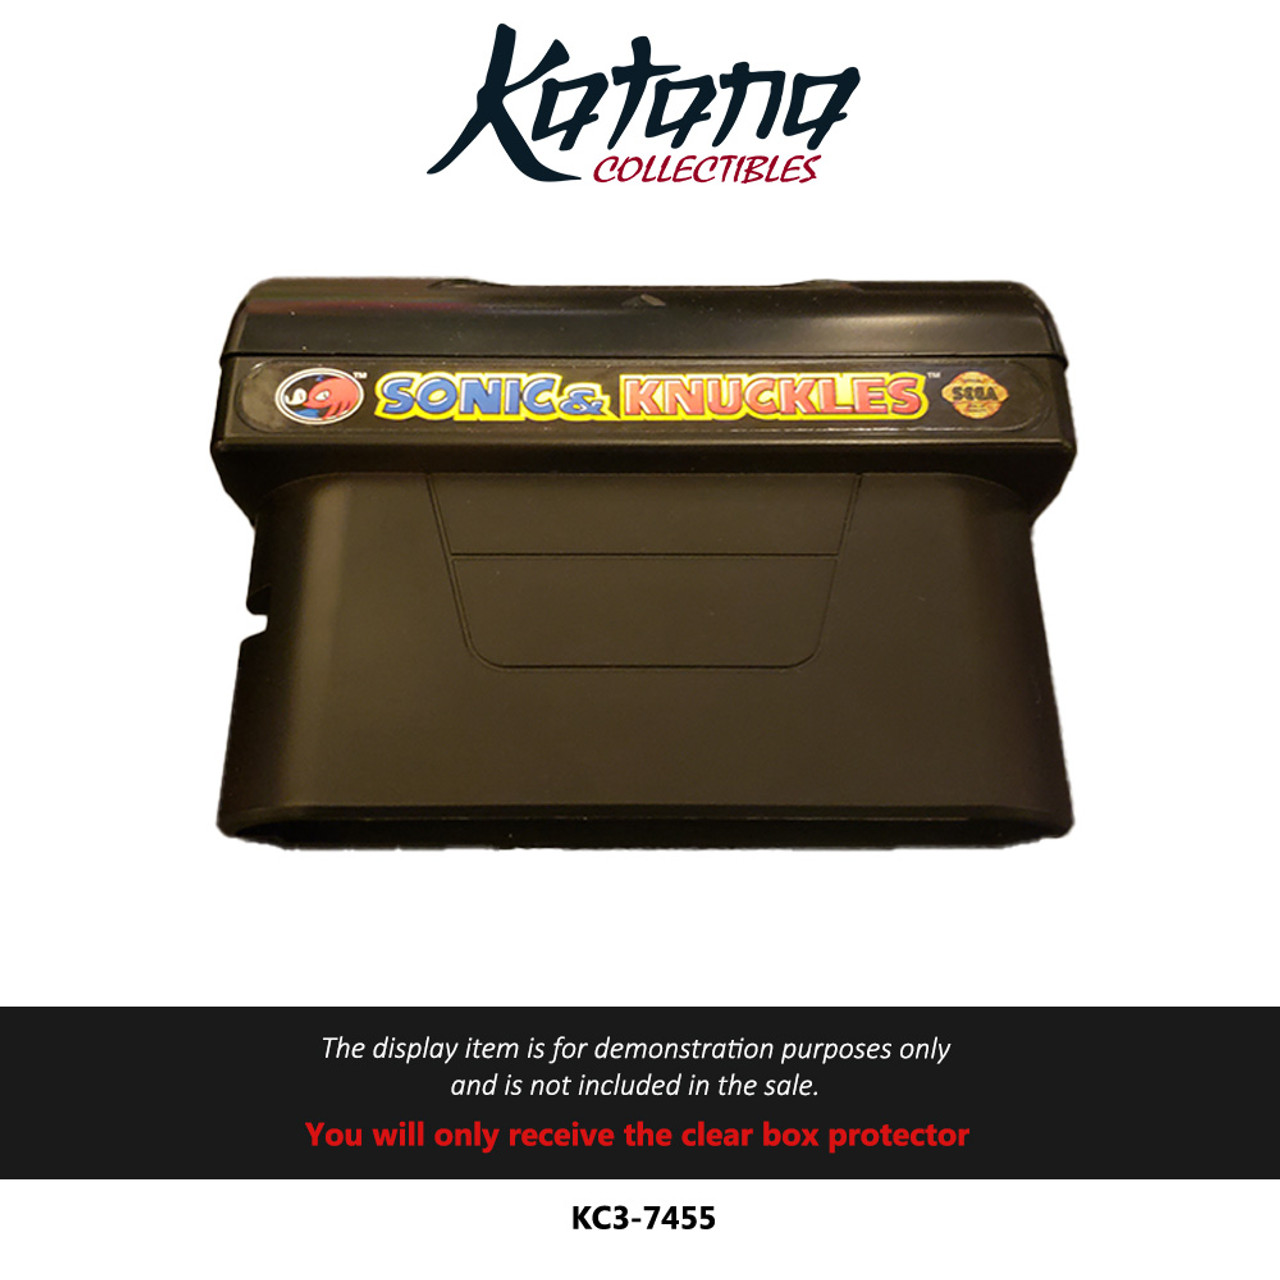 Katana Collectibles Protector For Sonic & Knuckles Sega Genesis Cart